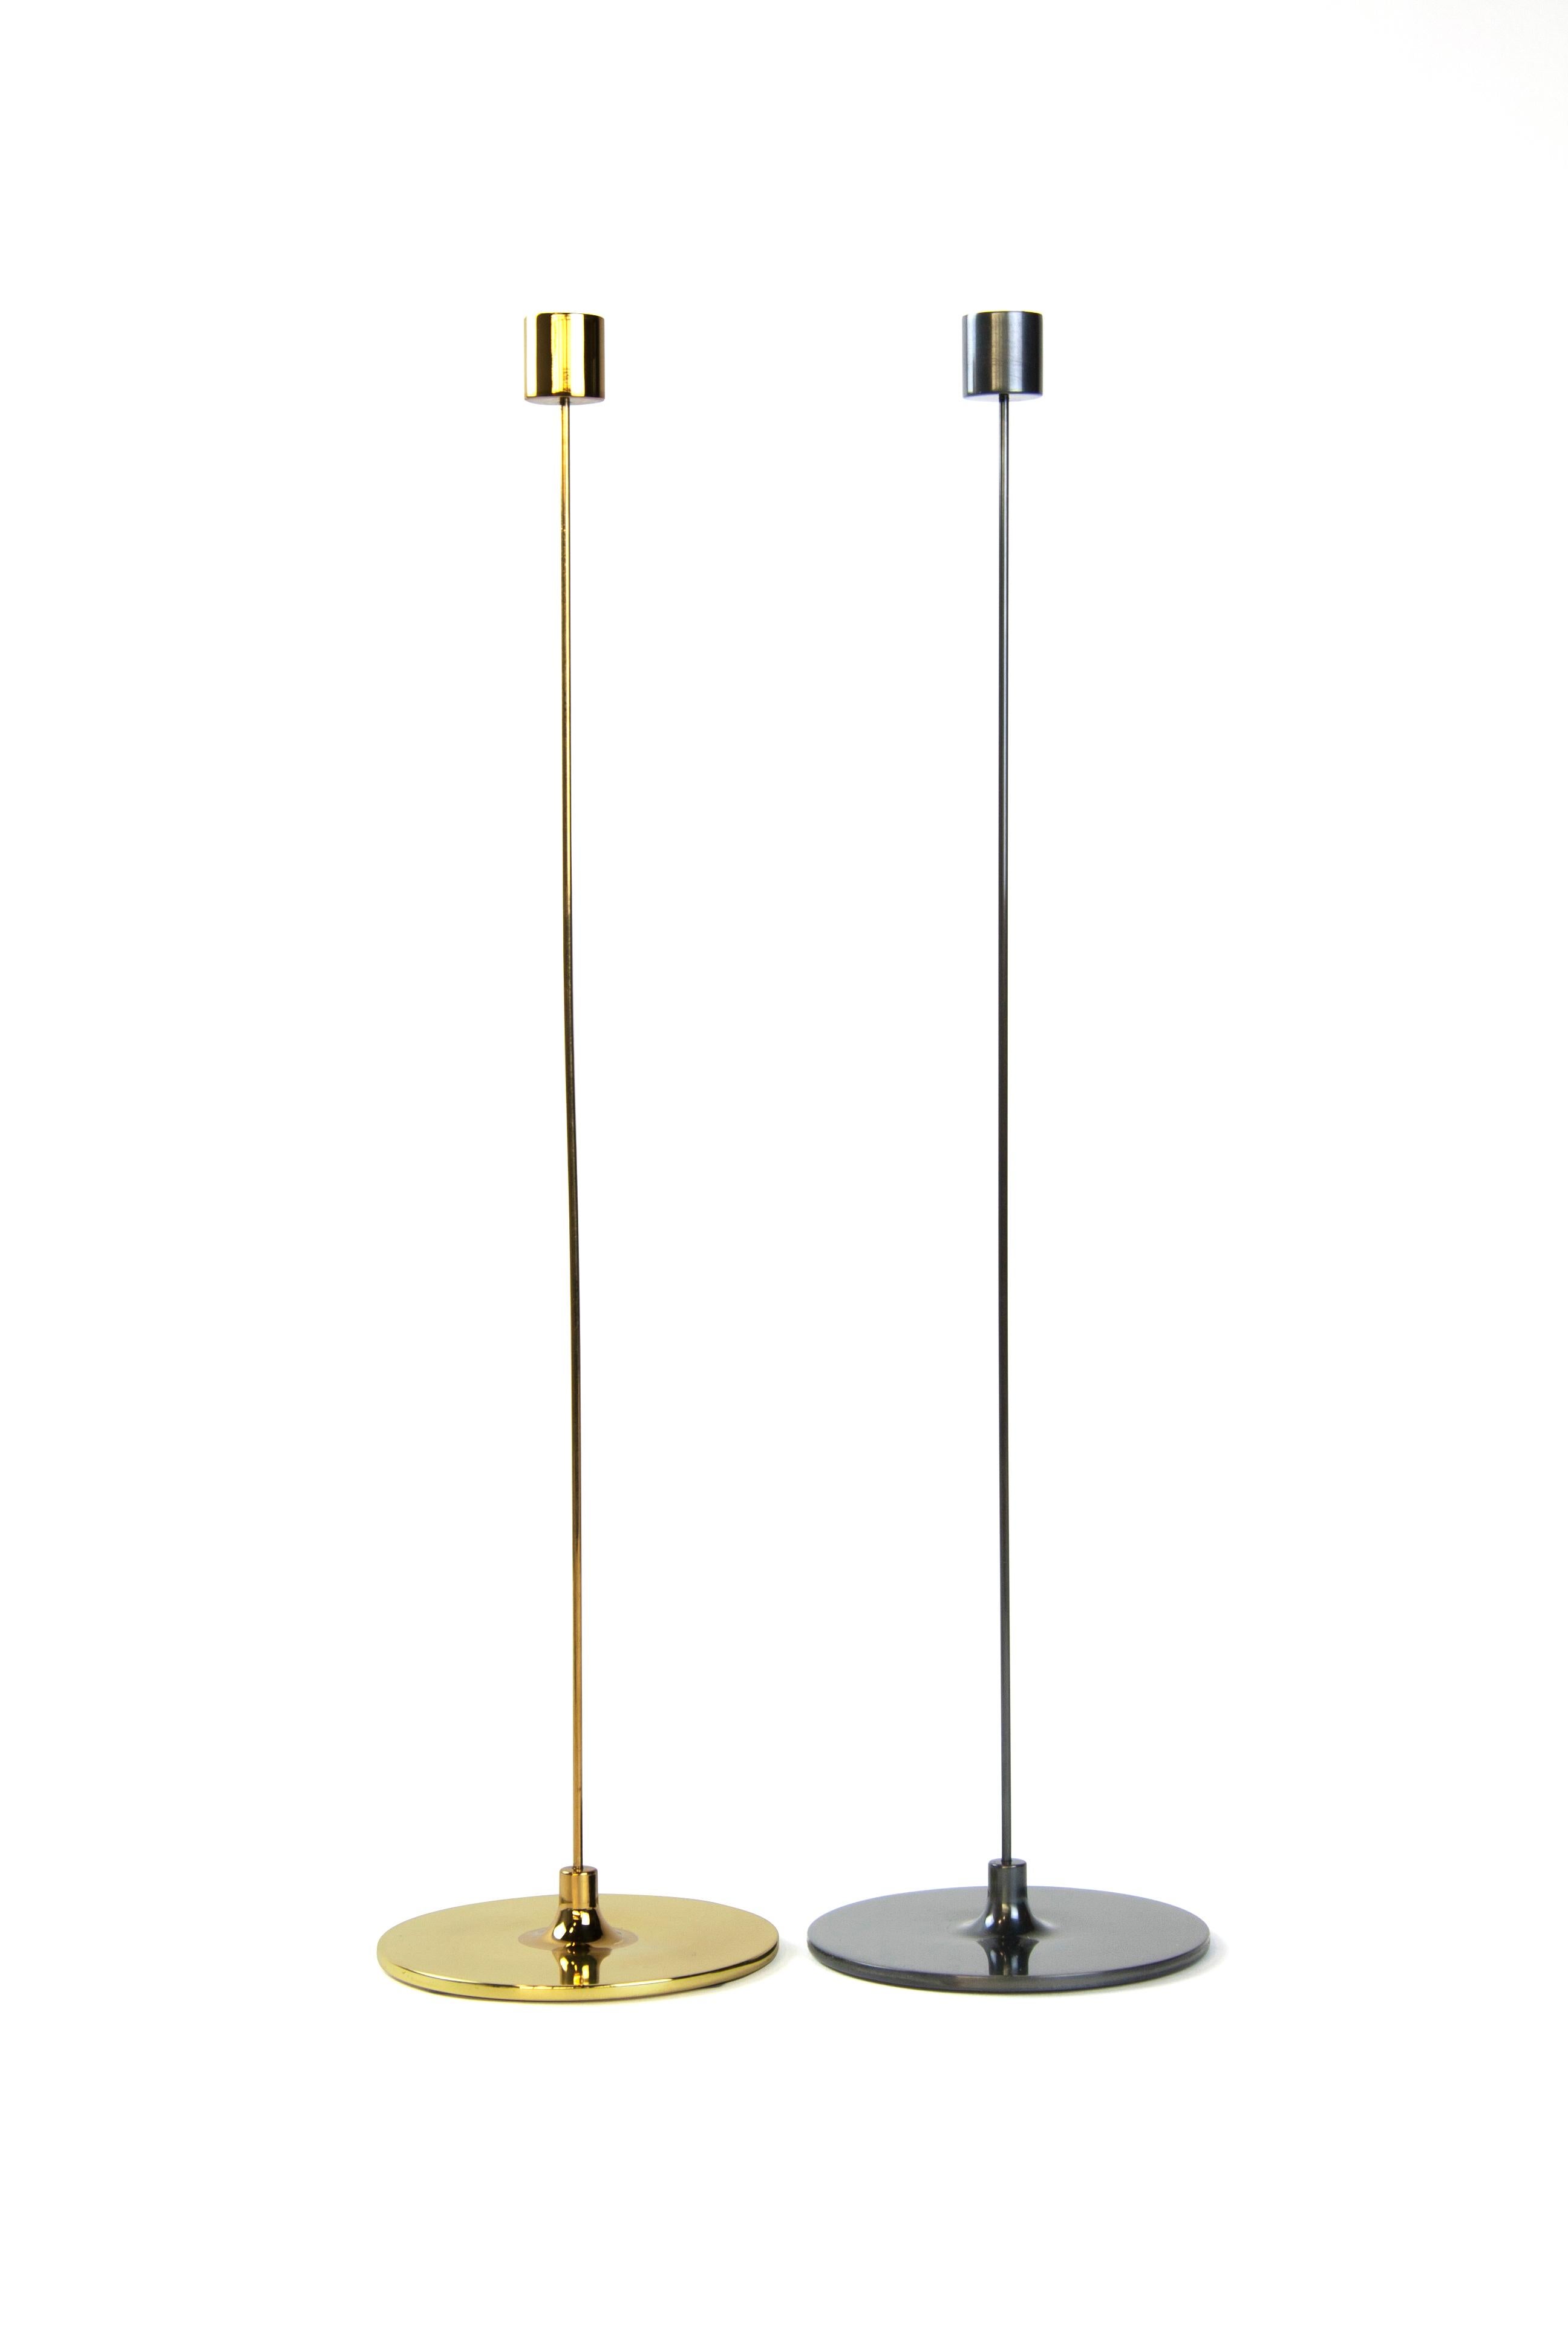 American Large Pin Darkened Brass Candlestick by Gentner Design For Sale